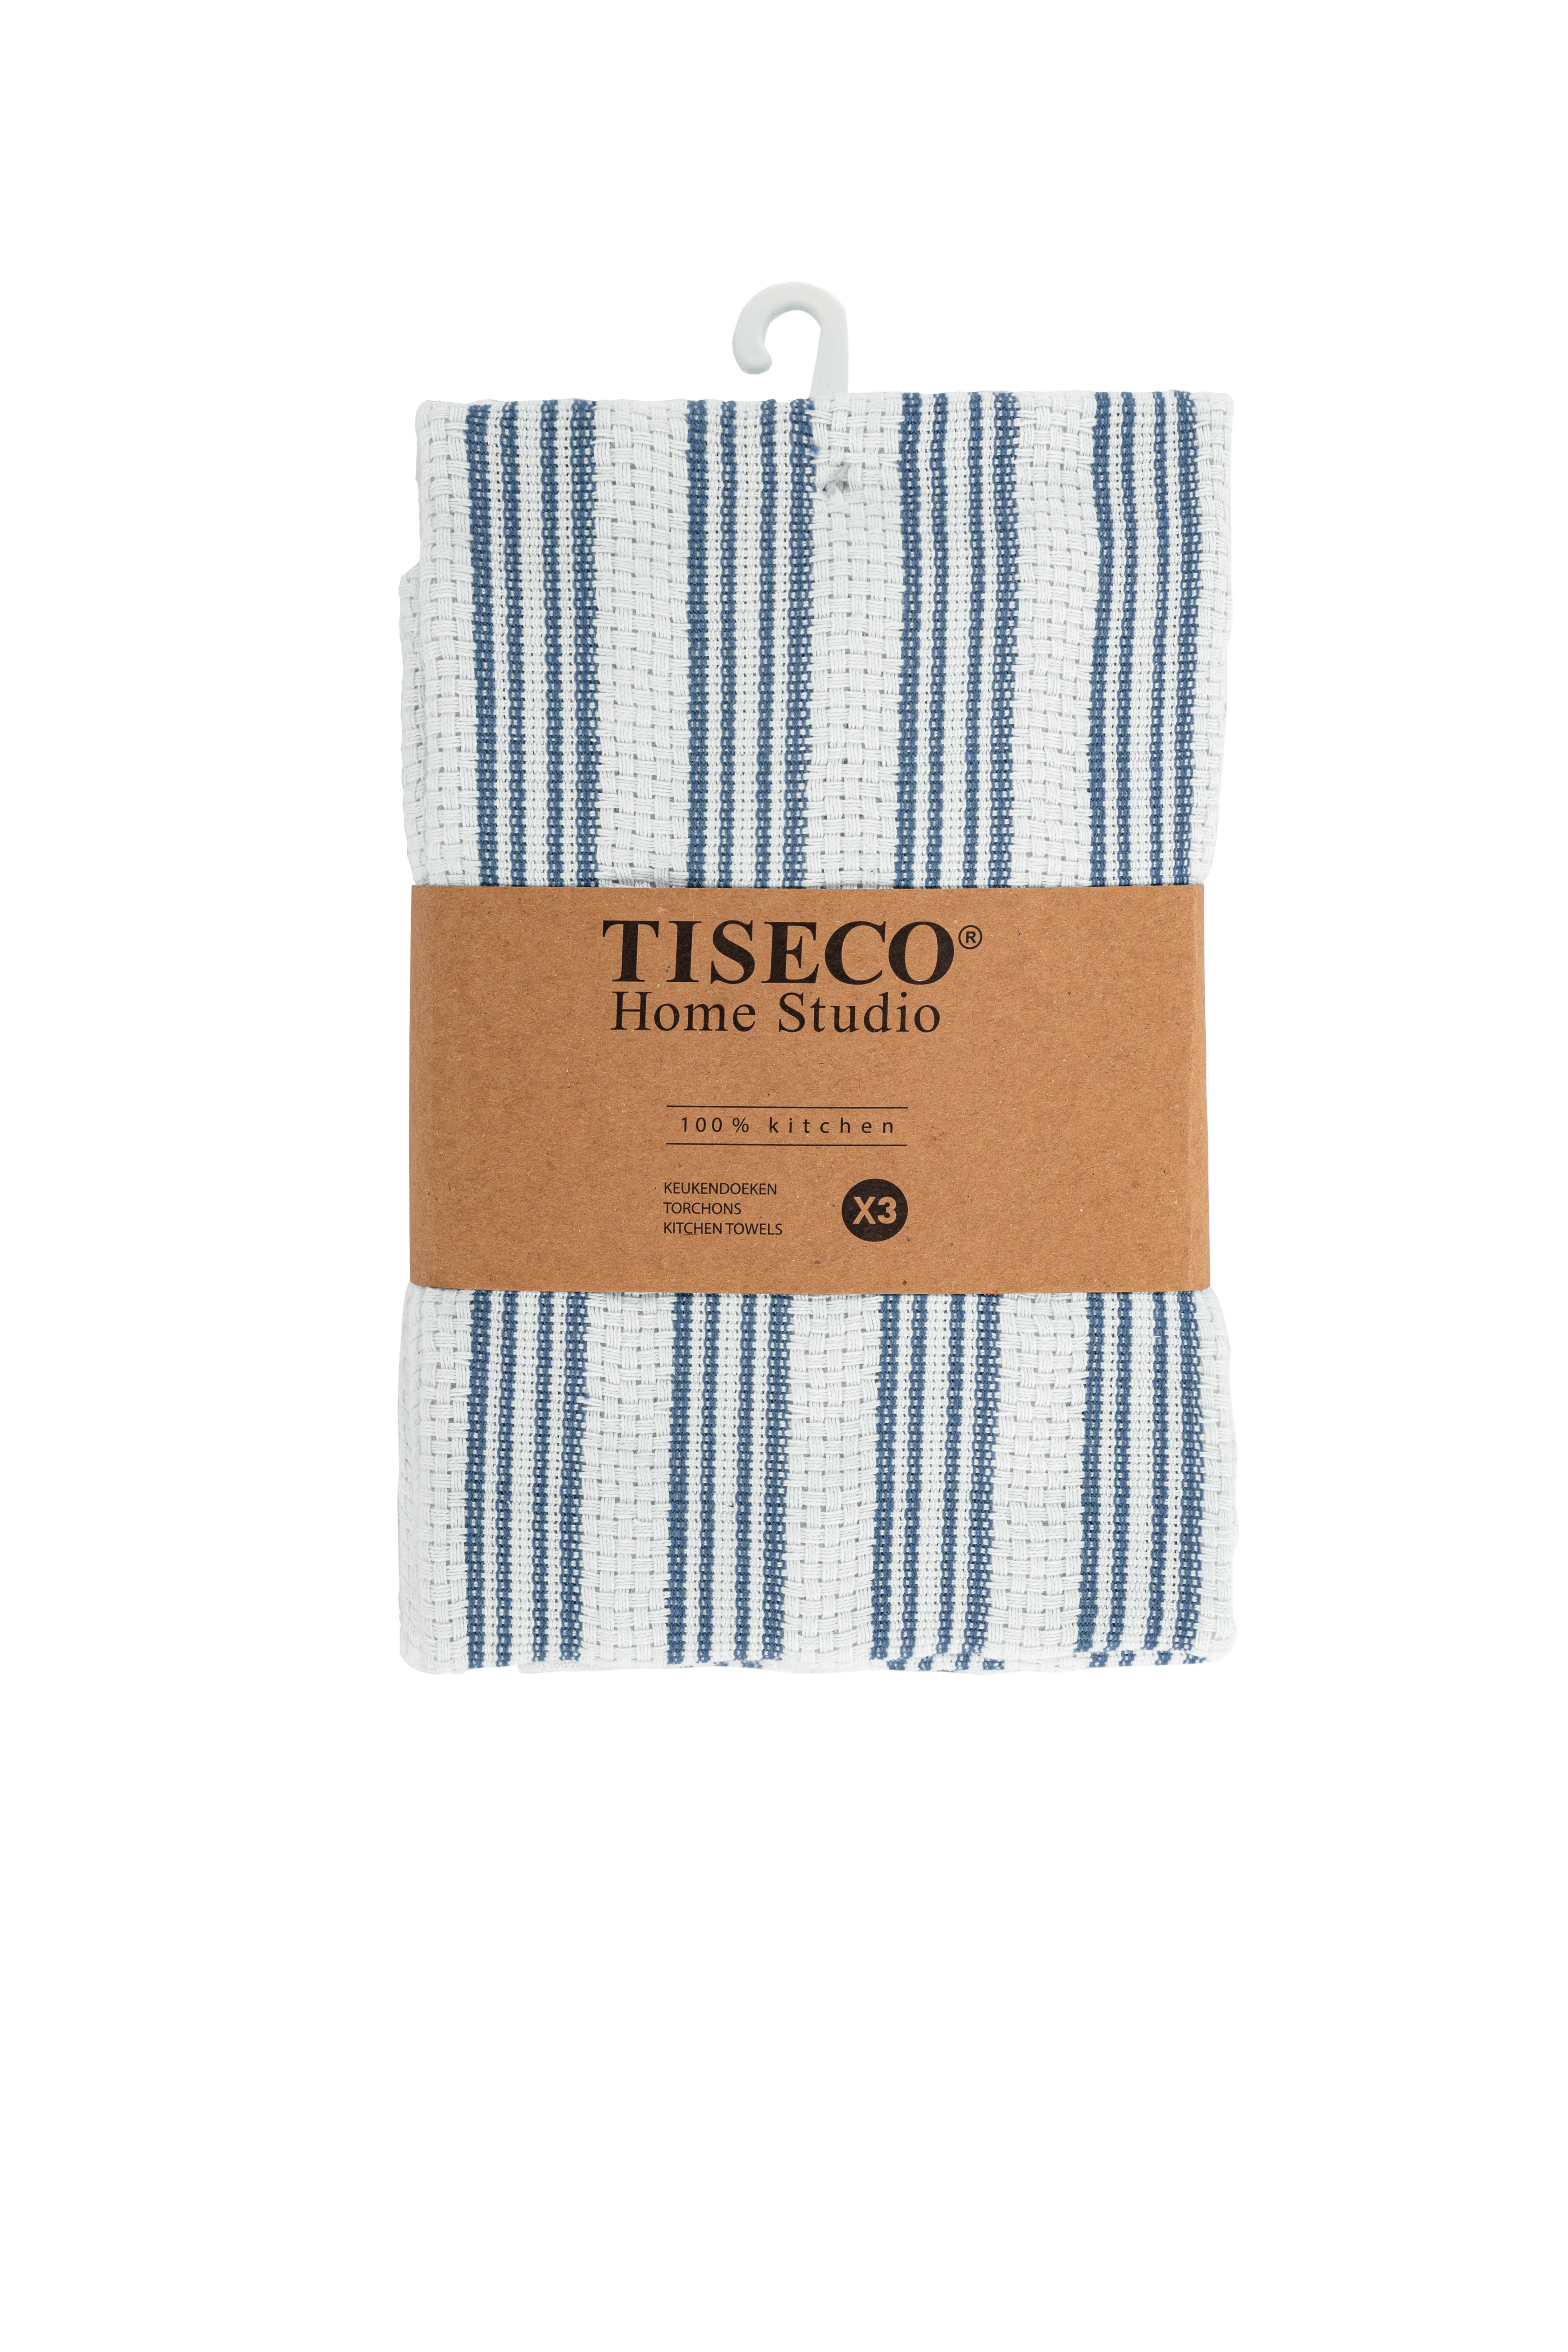 Kitchen towel BASKET WEAVE 50x70cm - set/3 - stone blue